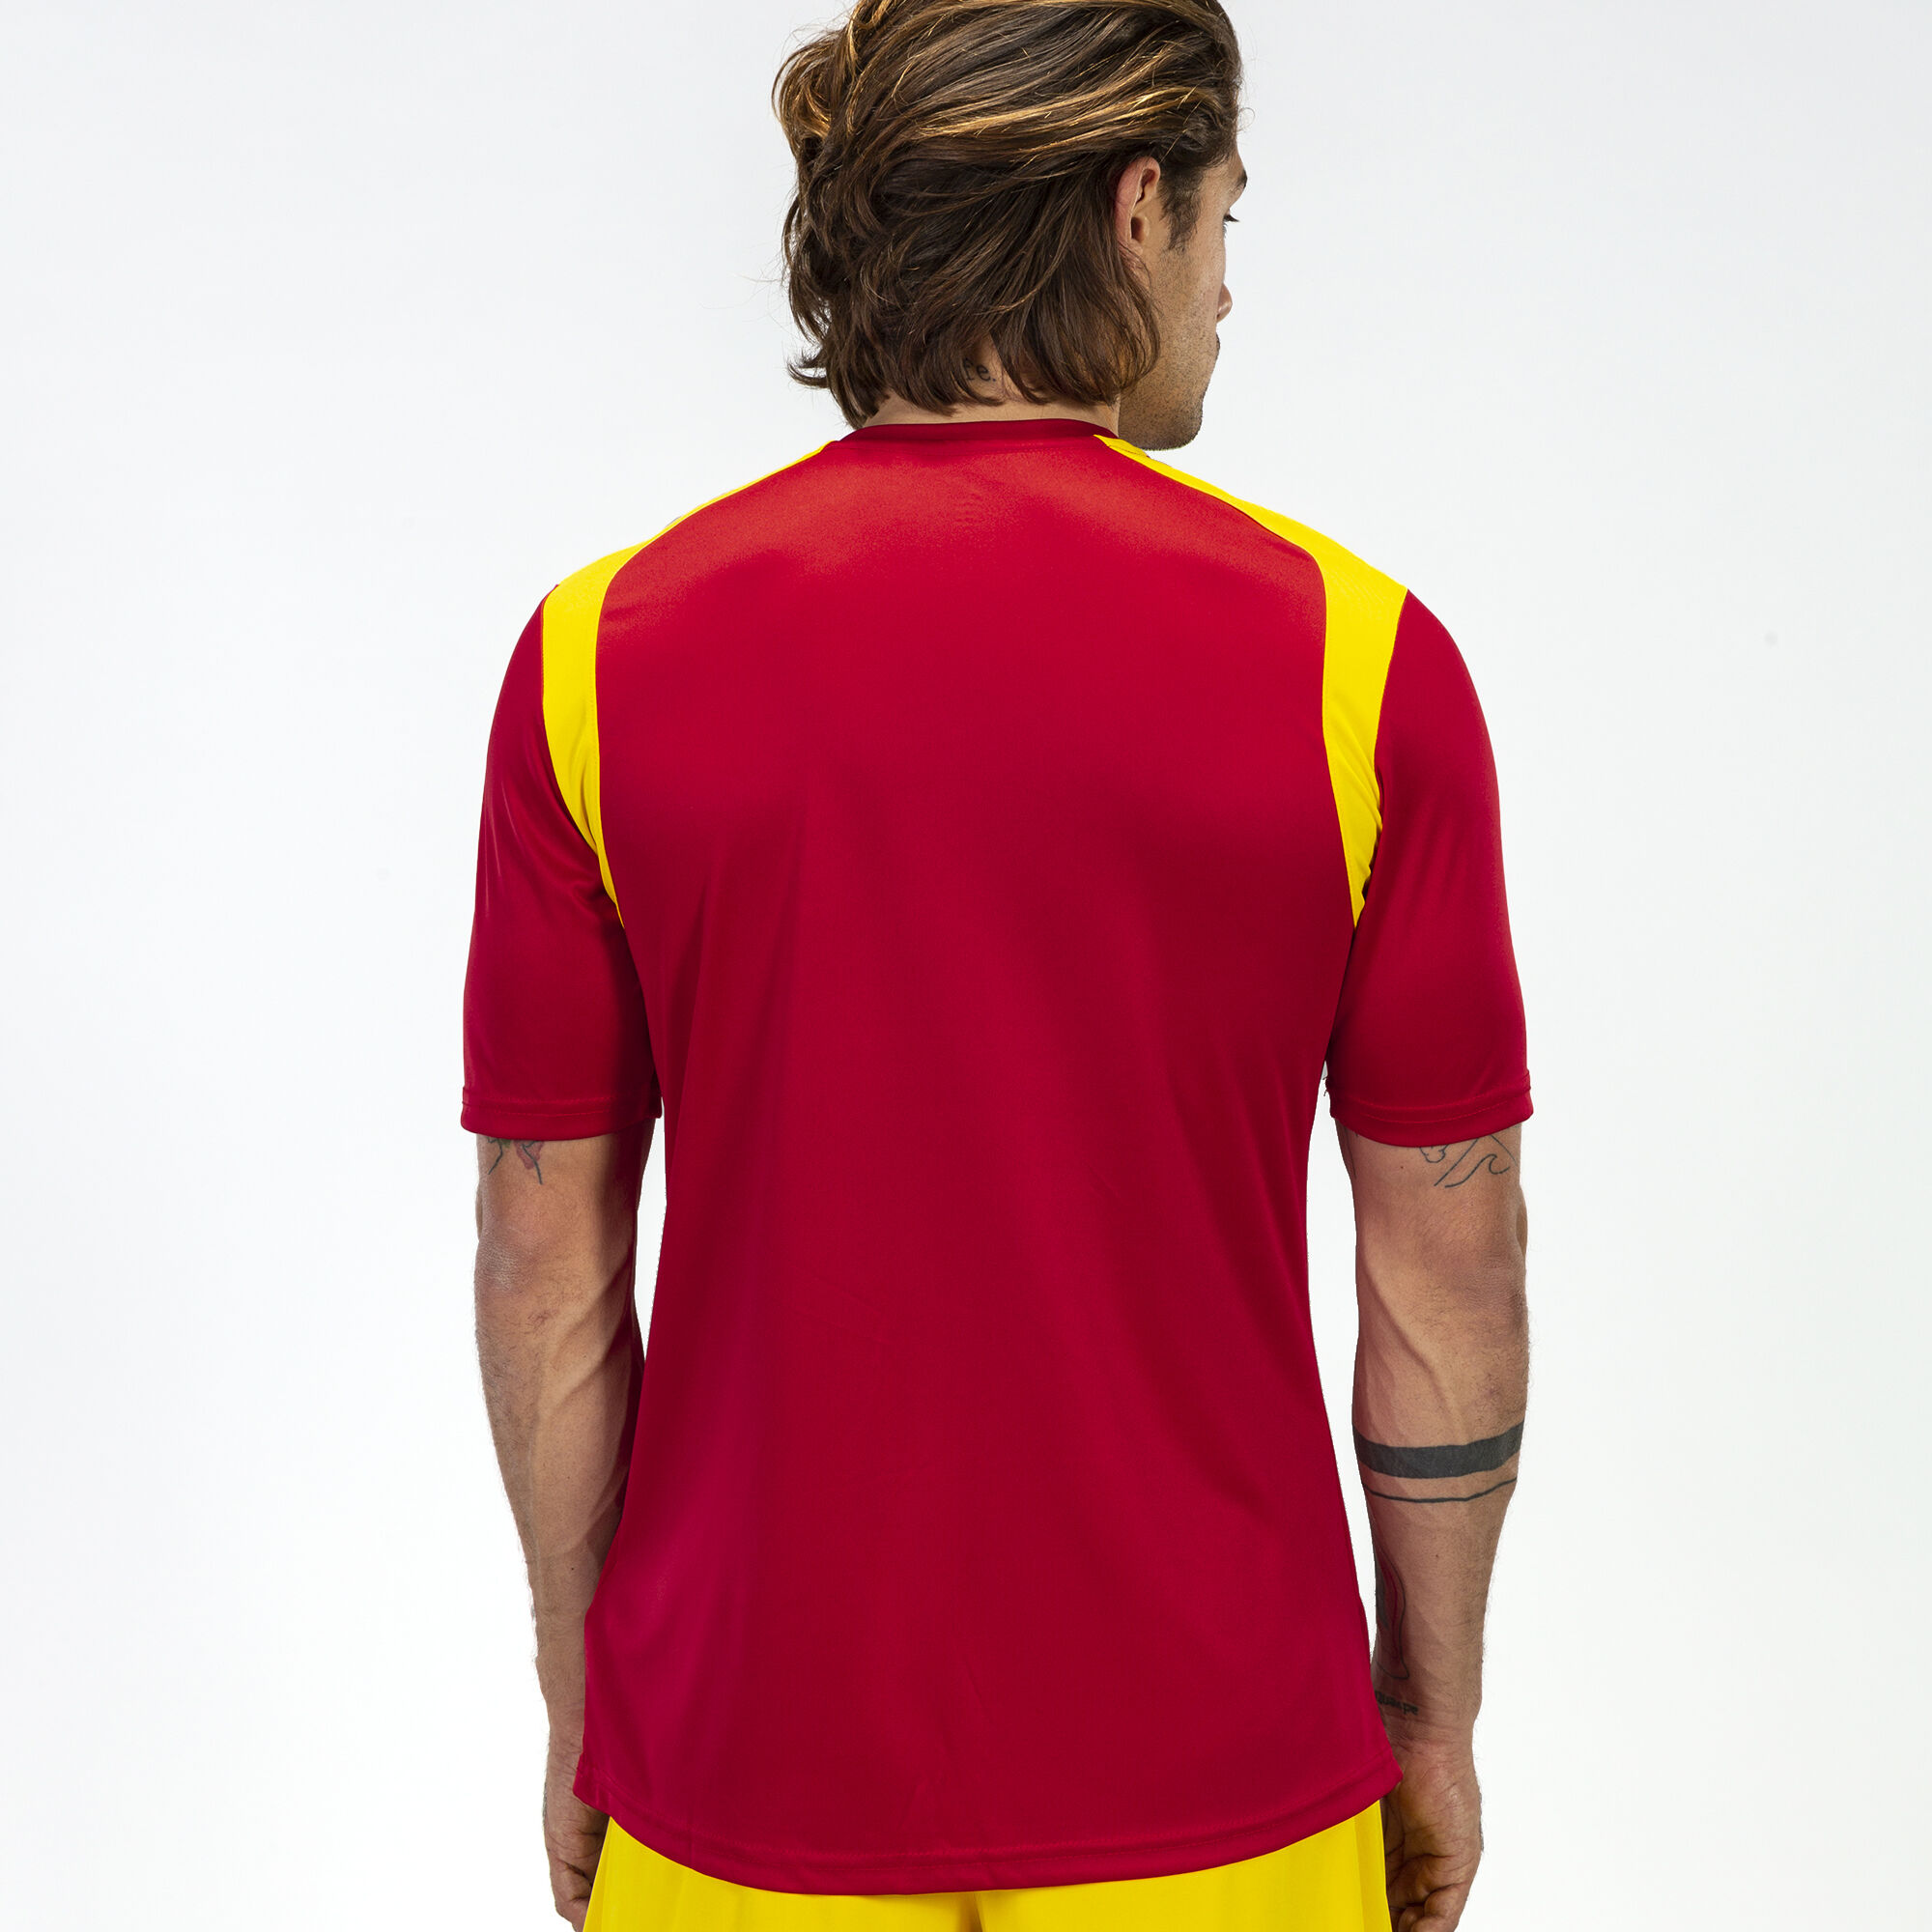 Camiseta manga corta hombre Championship V rojo amarillo